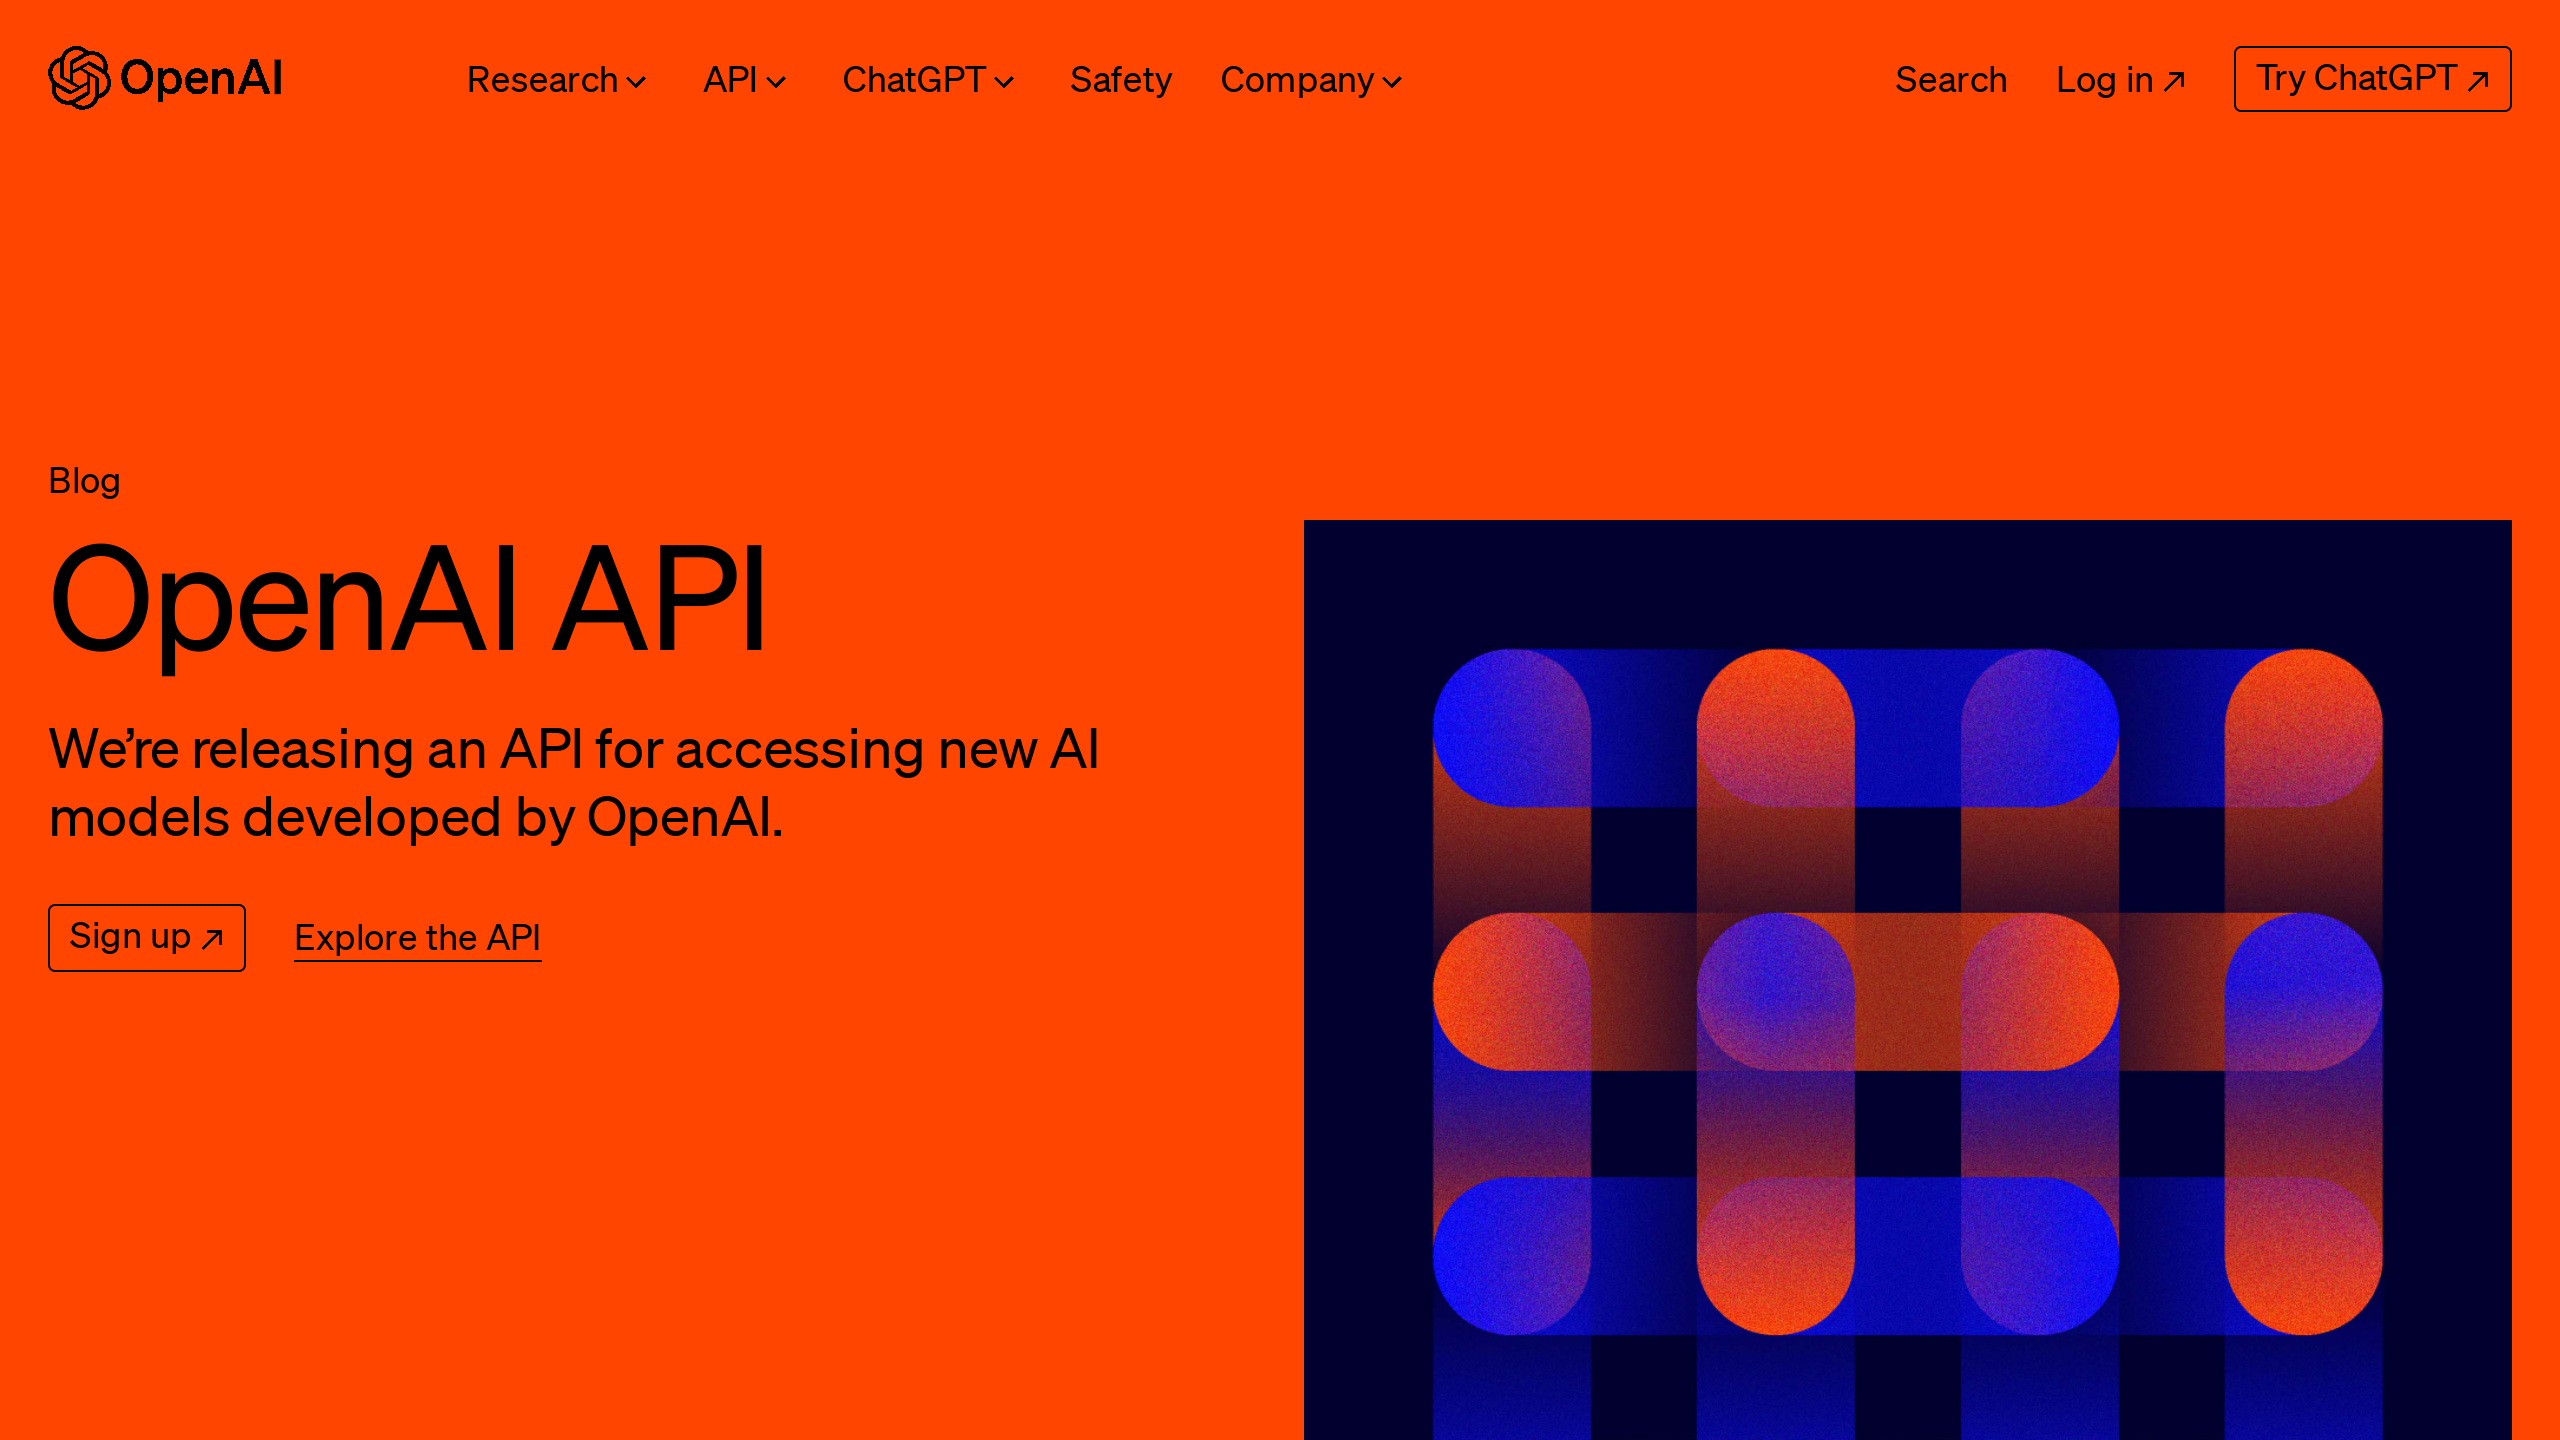 OpenAI's website screenshot